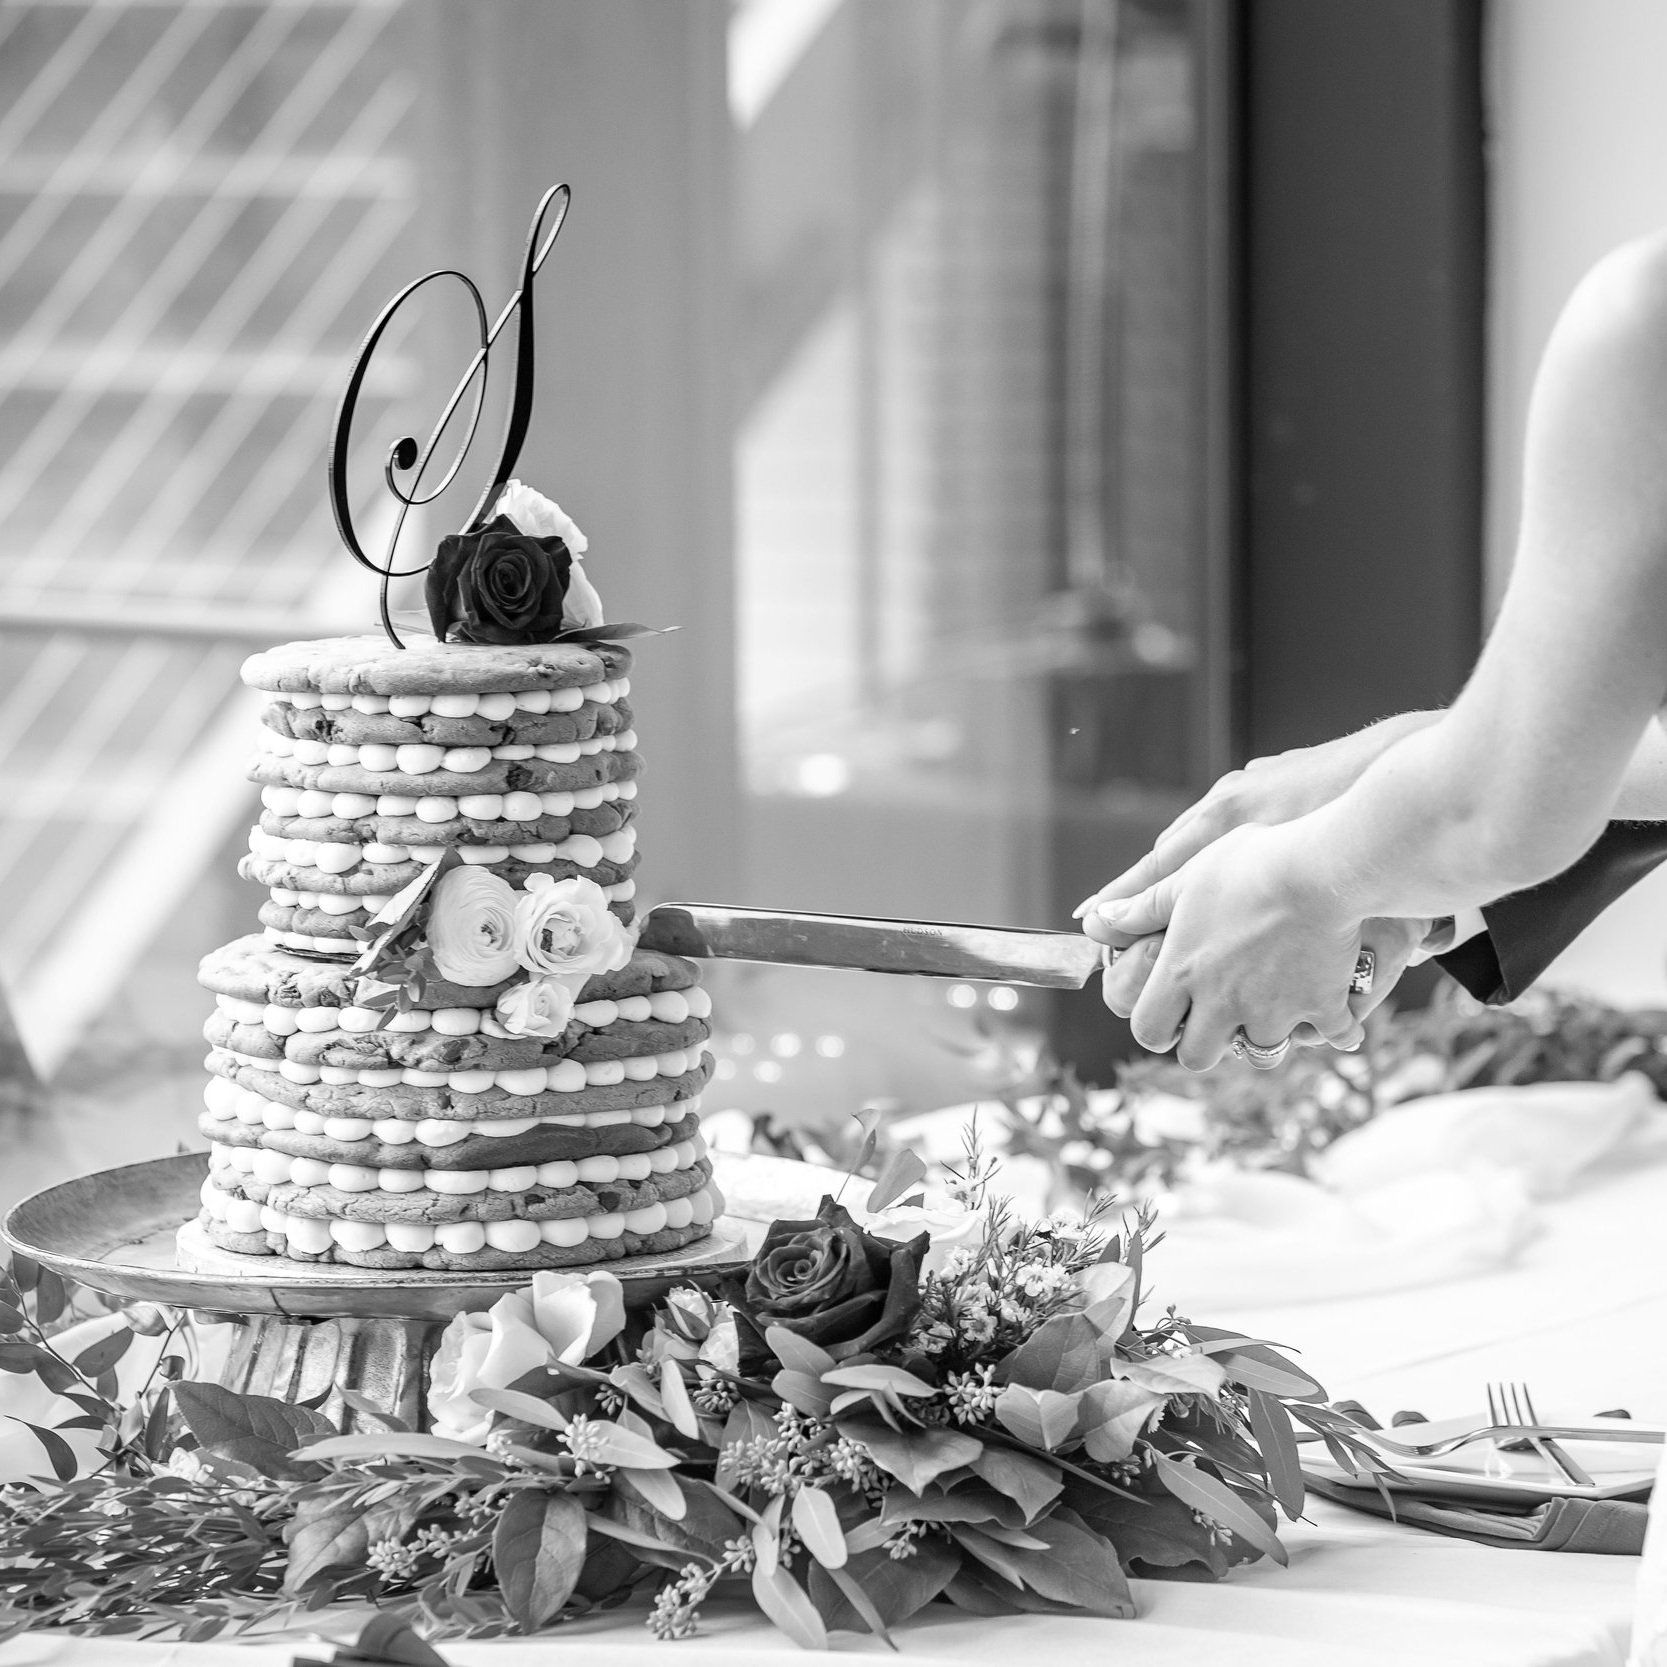 Heather+Bellini+Photography+Cake+Cutting.jpg